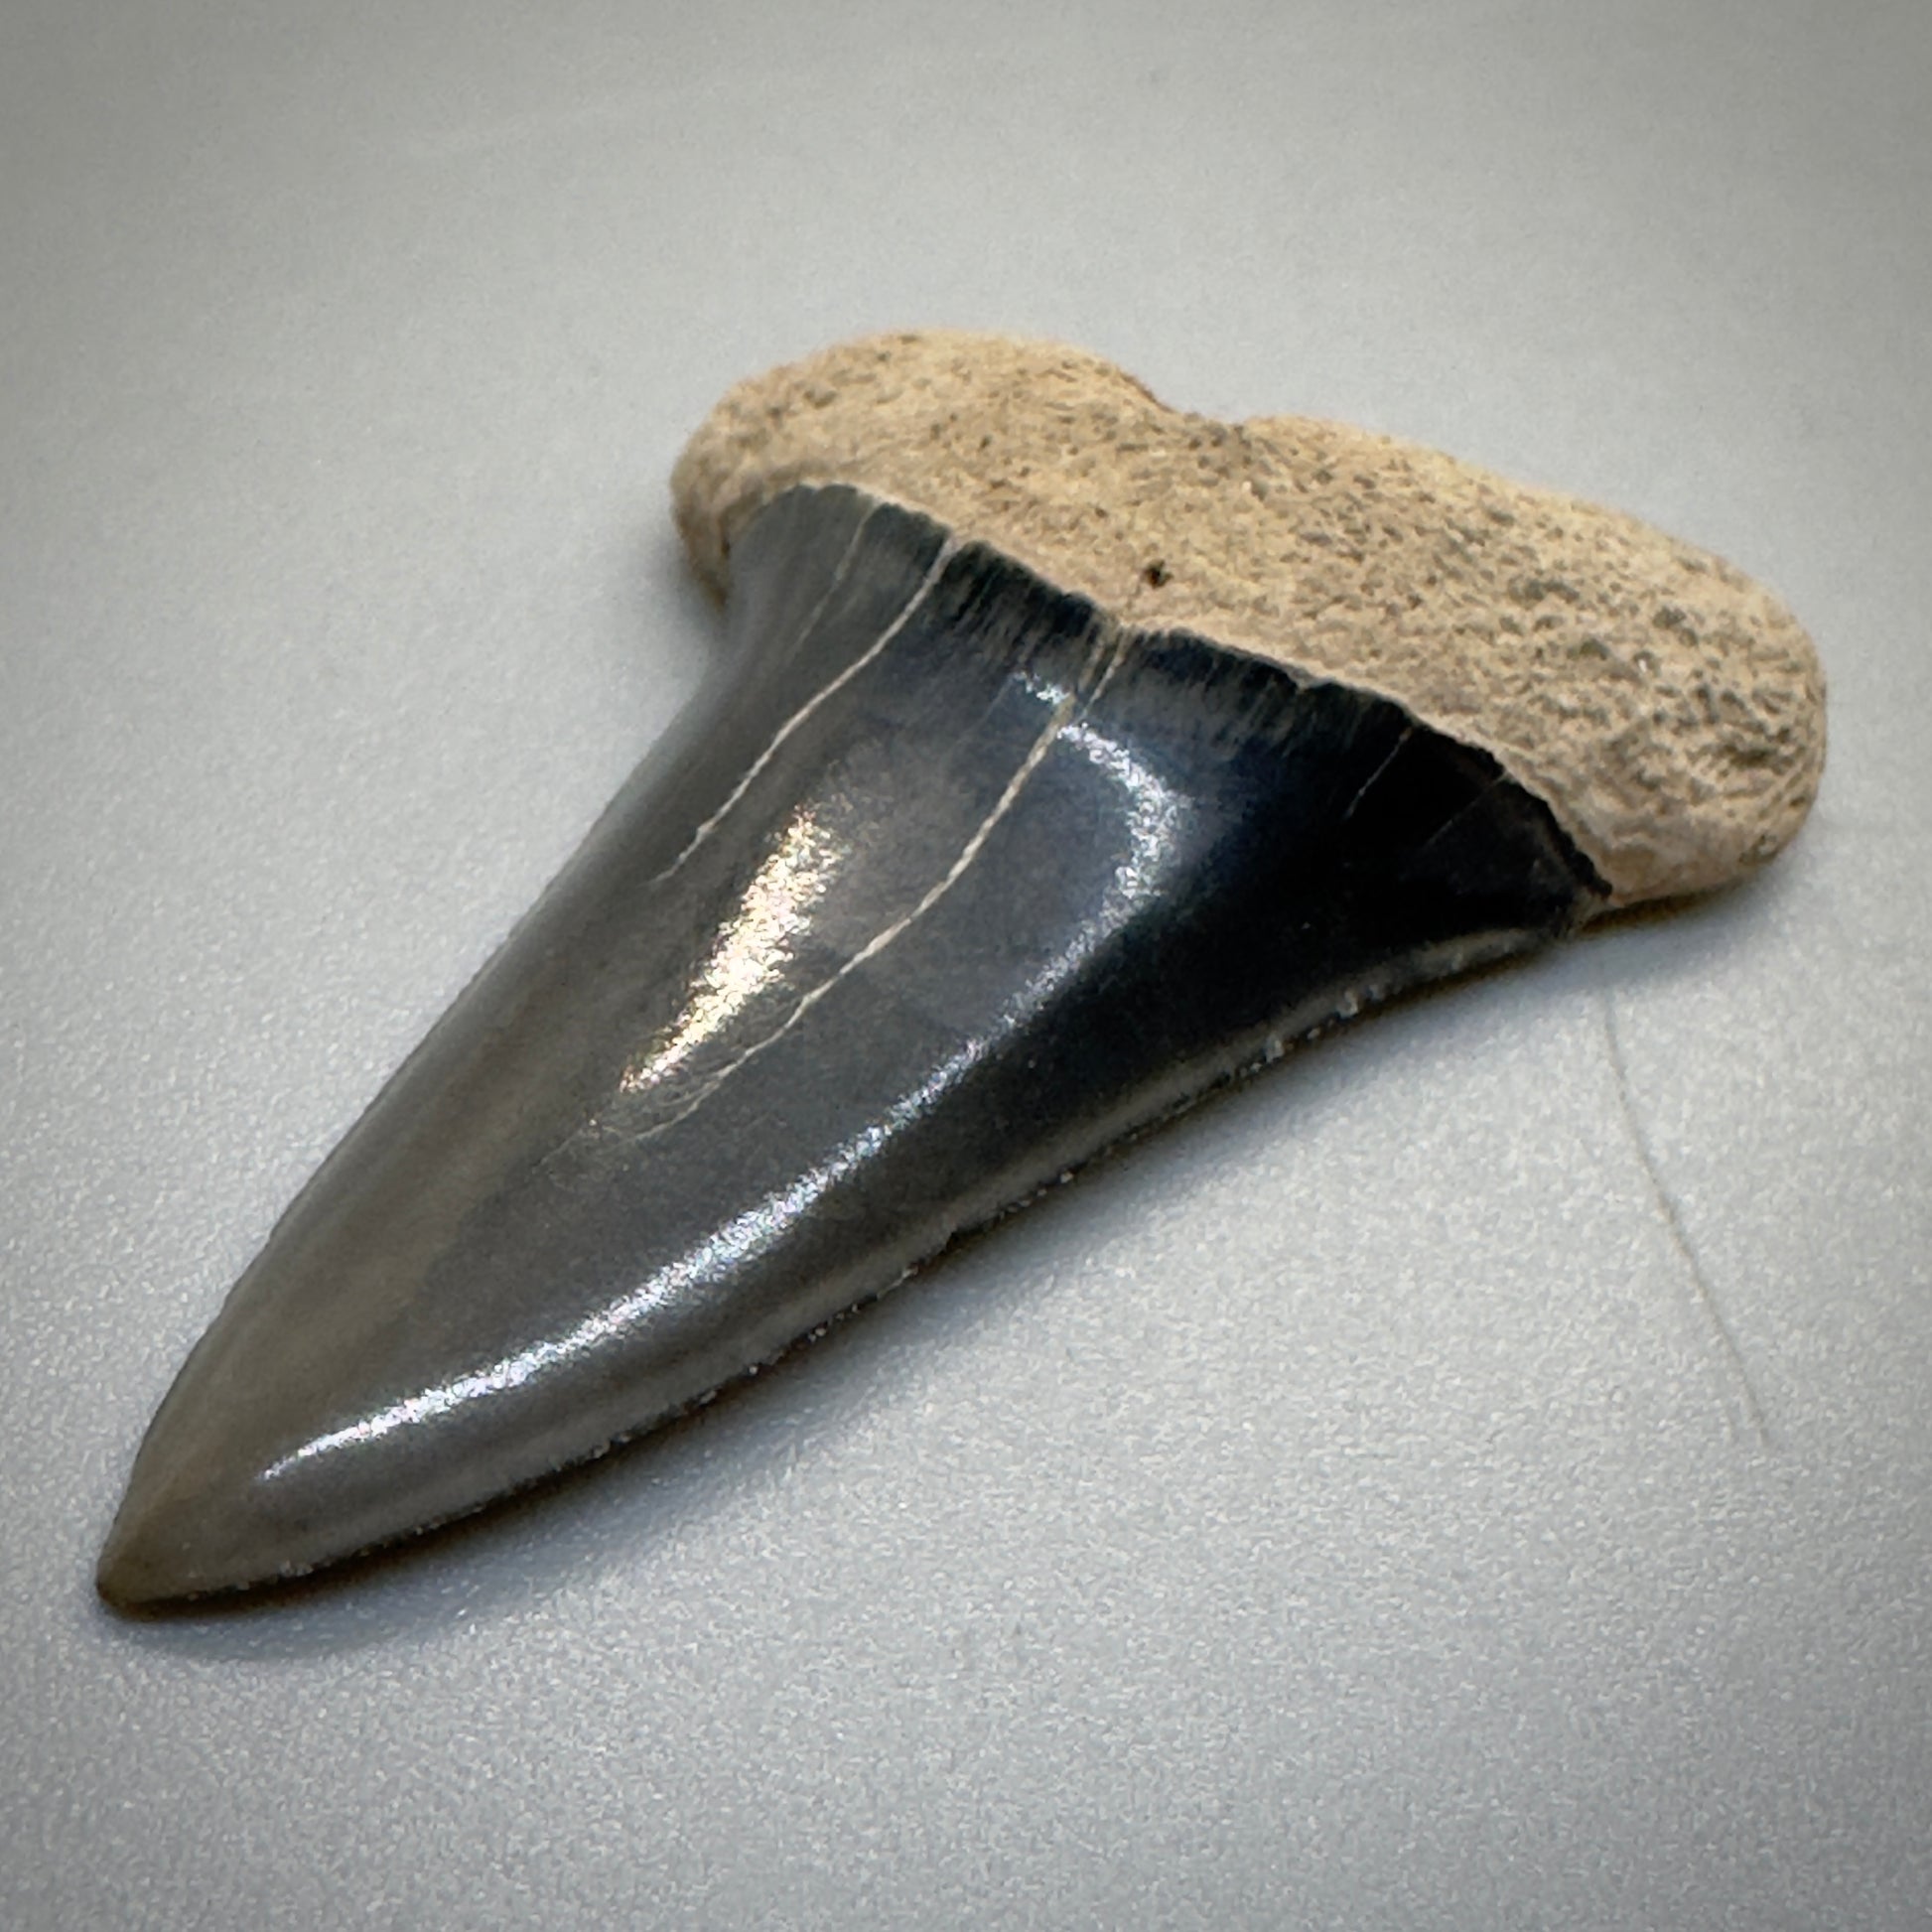 Dark colors 1.54 inches Extinct Longfin Mako - Isurus retroflexus Shark tooth from Southeast, USA M519 front right